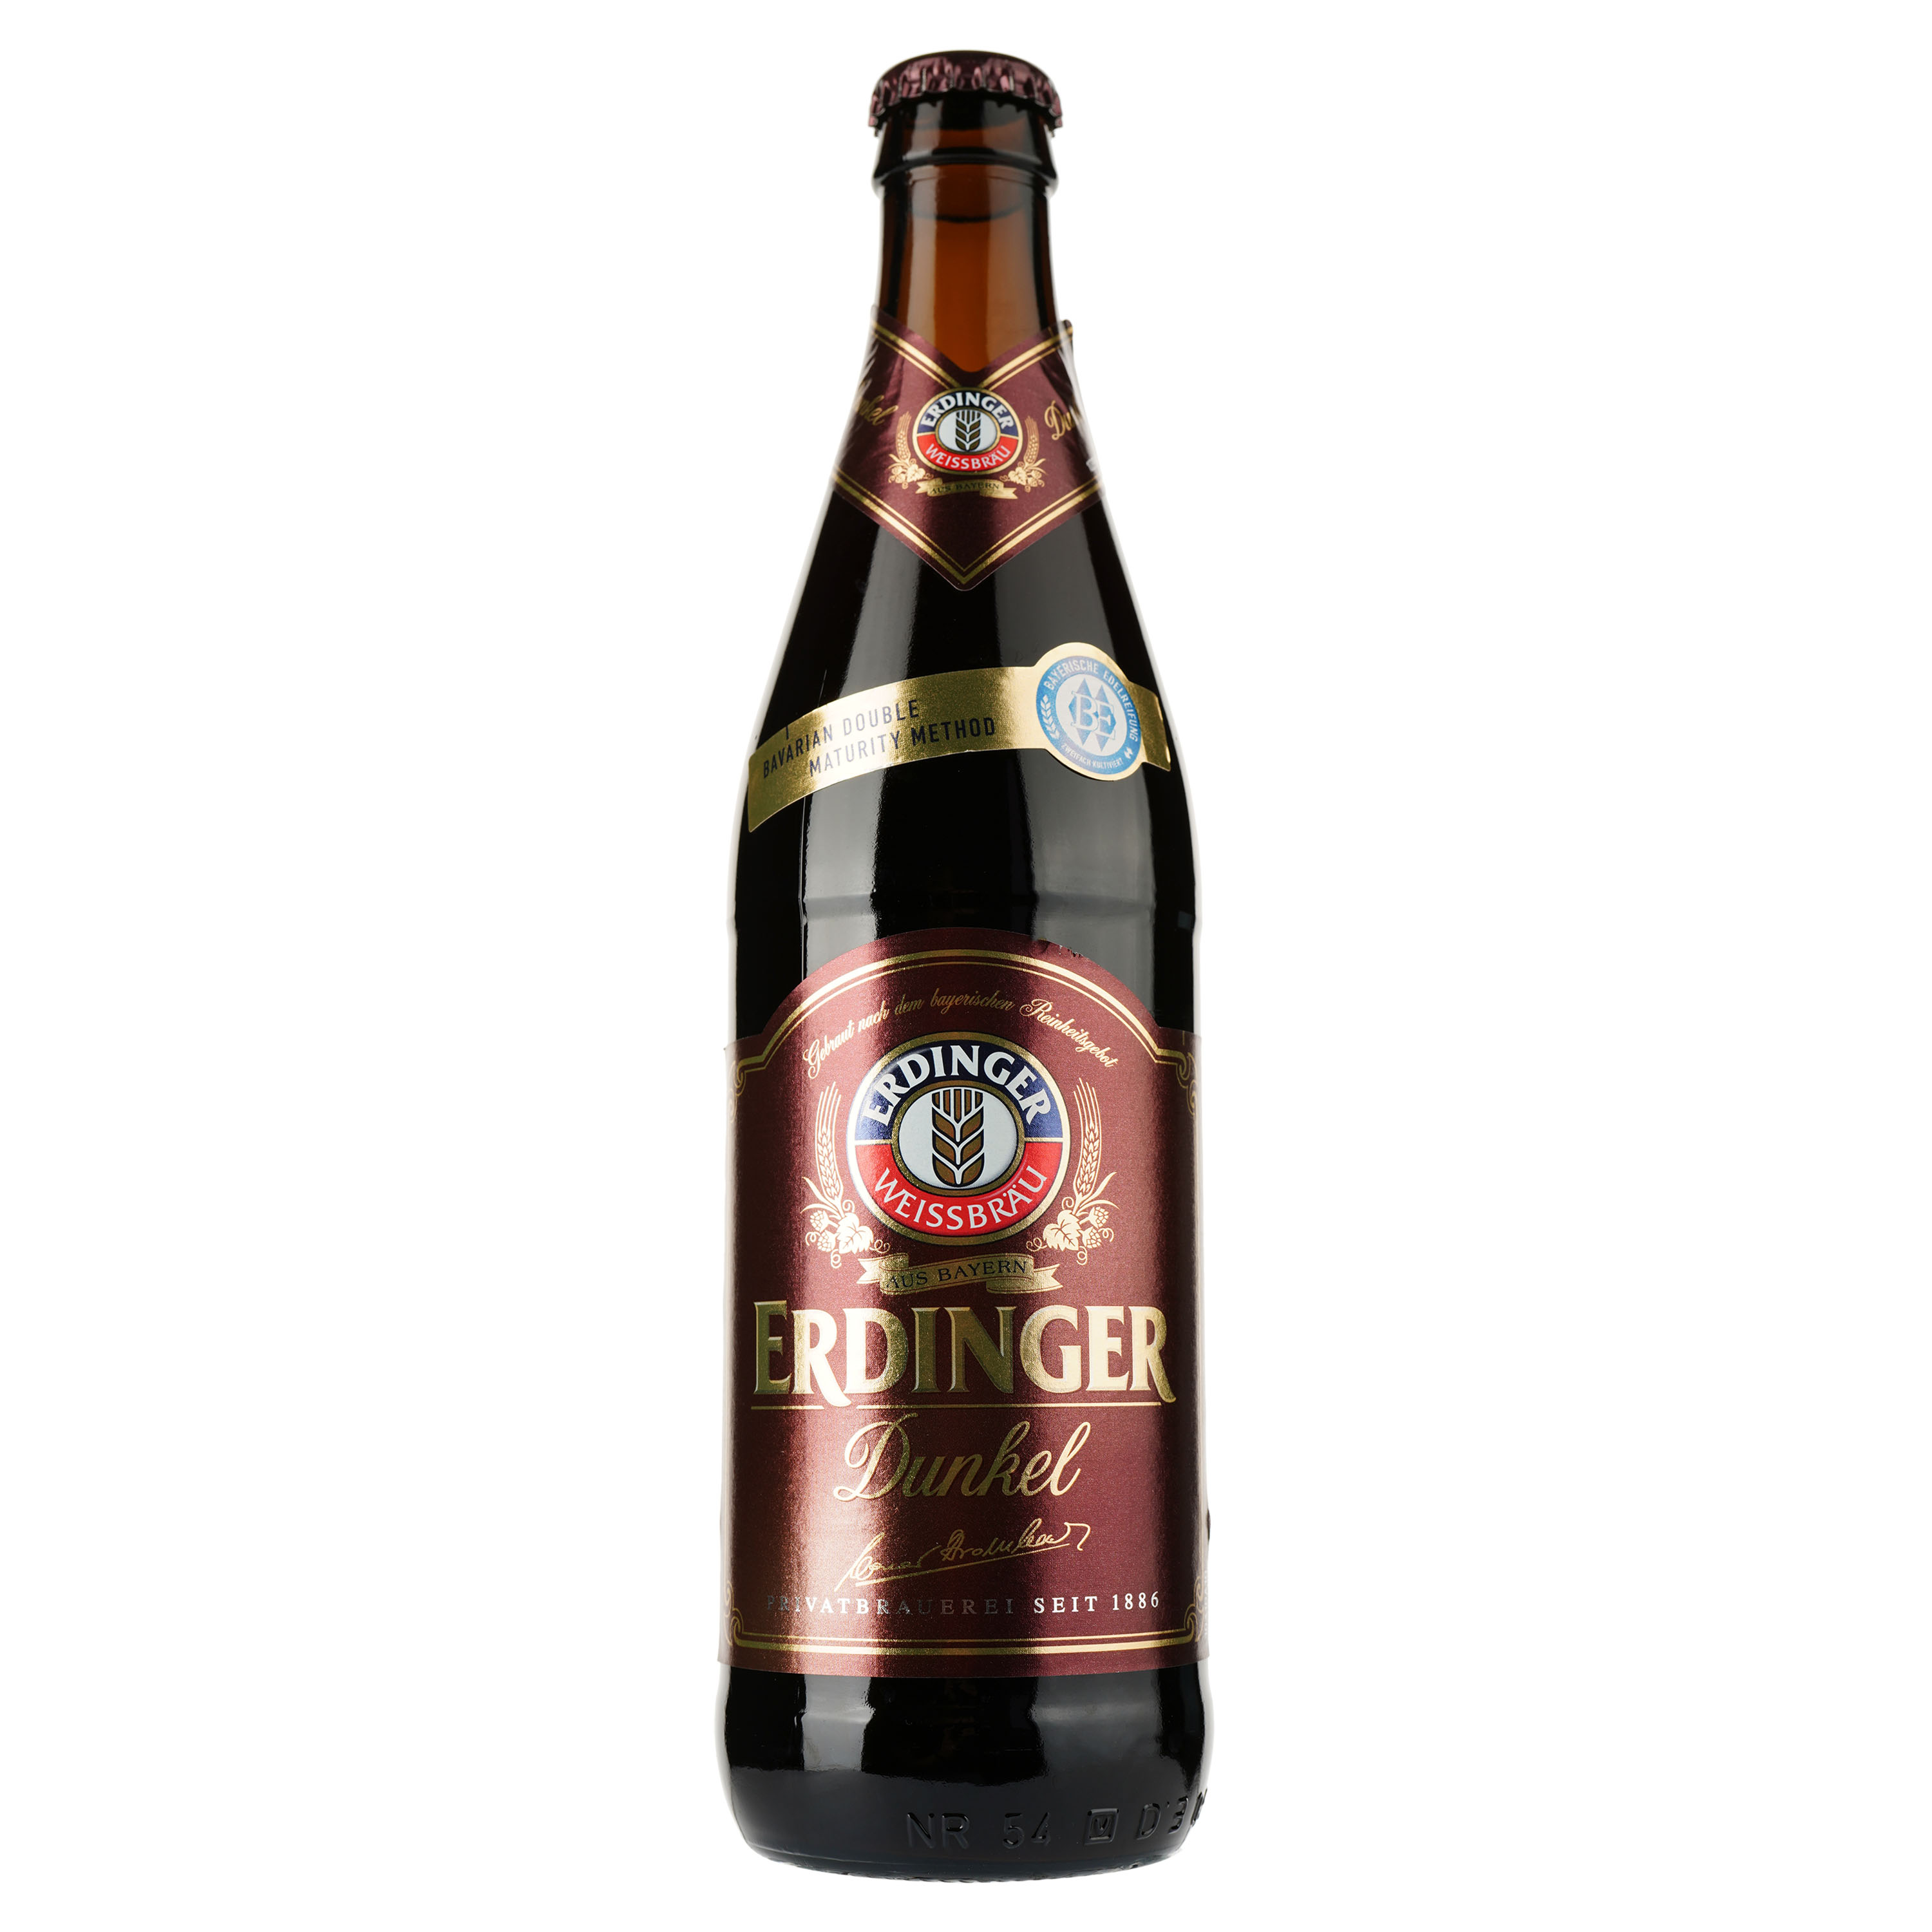 Пиво Erdinger Dunkel, темное, 5,3%, 0,5 л (104553) - фото 1